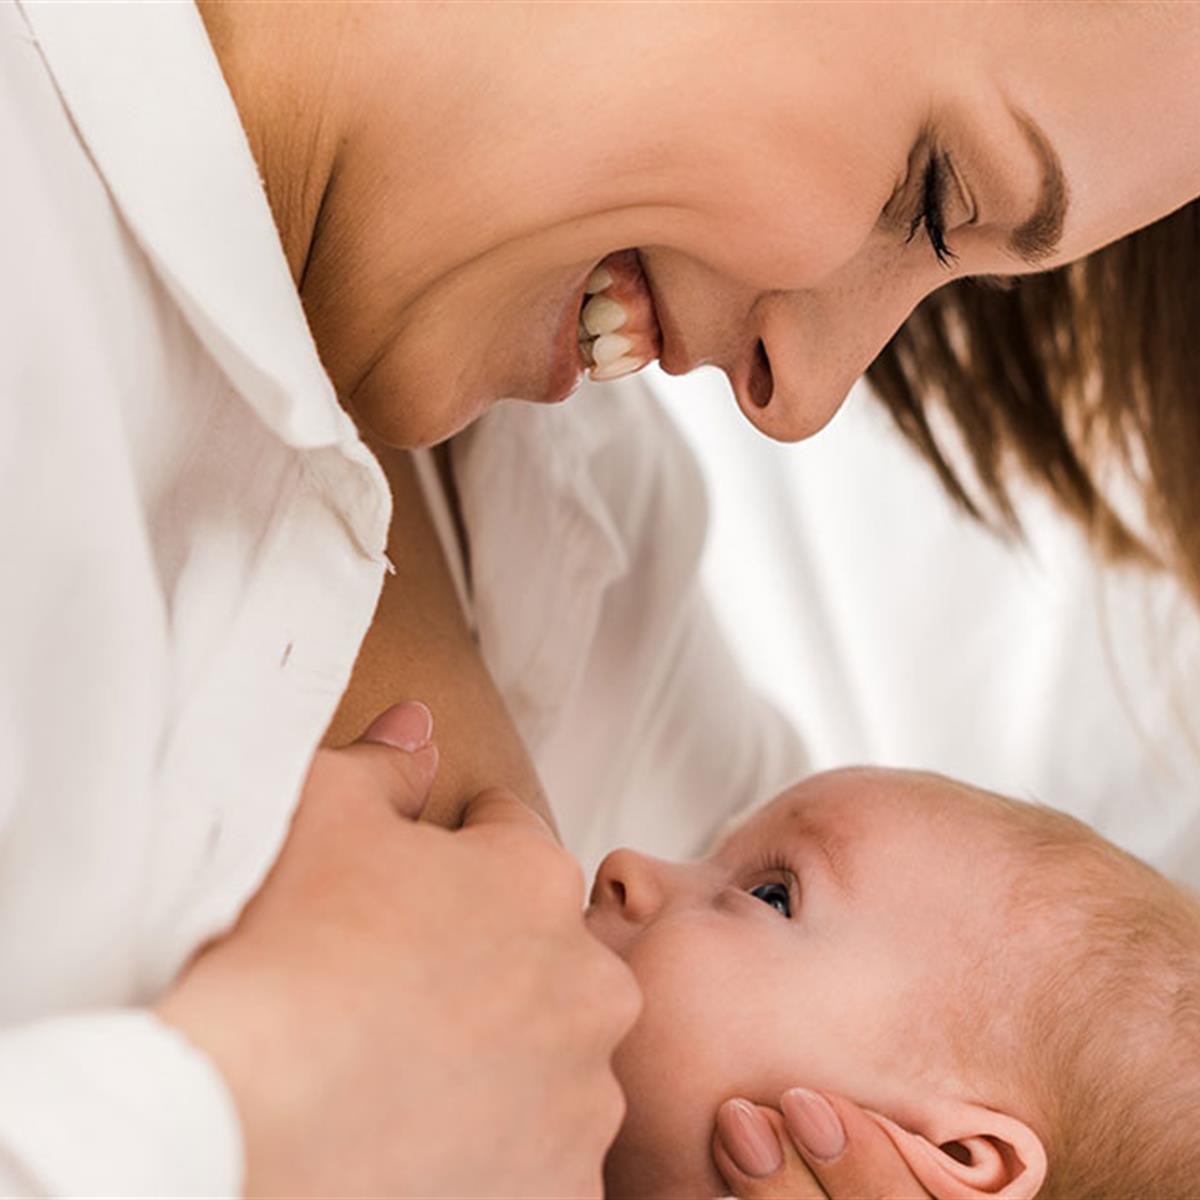 https://www.healthychildren.org/SiteCollectionImagesArticleImages/ensuring-proper-latch-on-during-breastfeeding.jpg?RenditionID=6